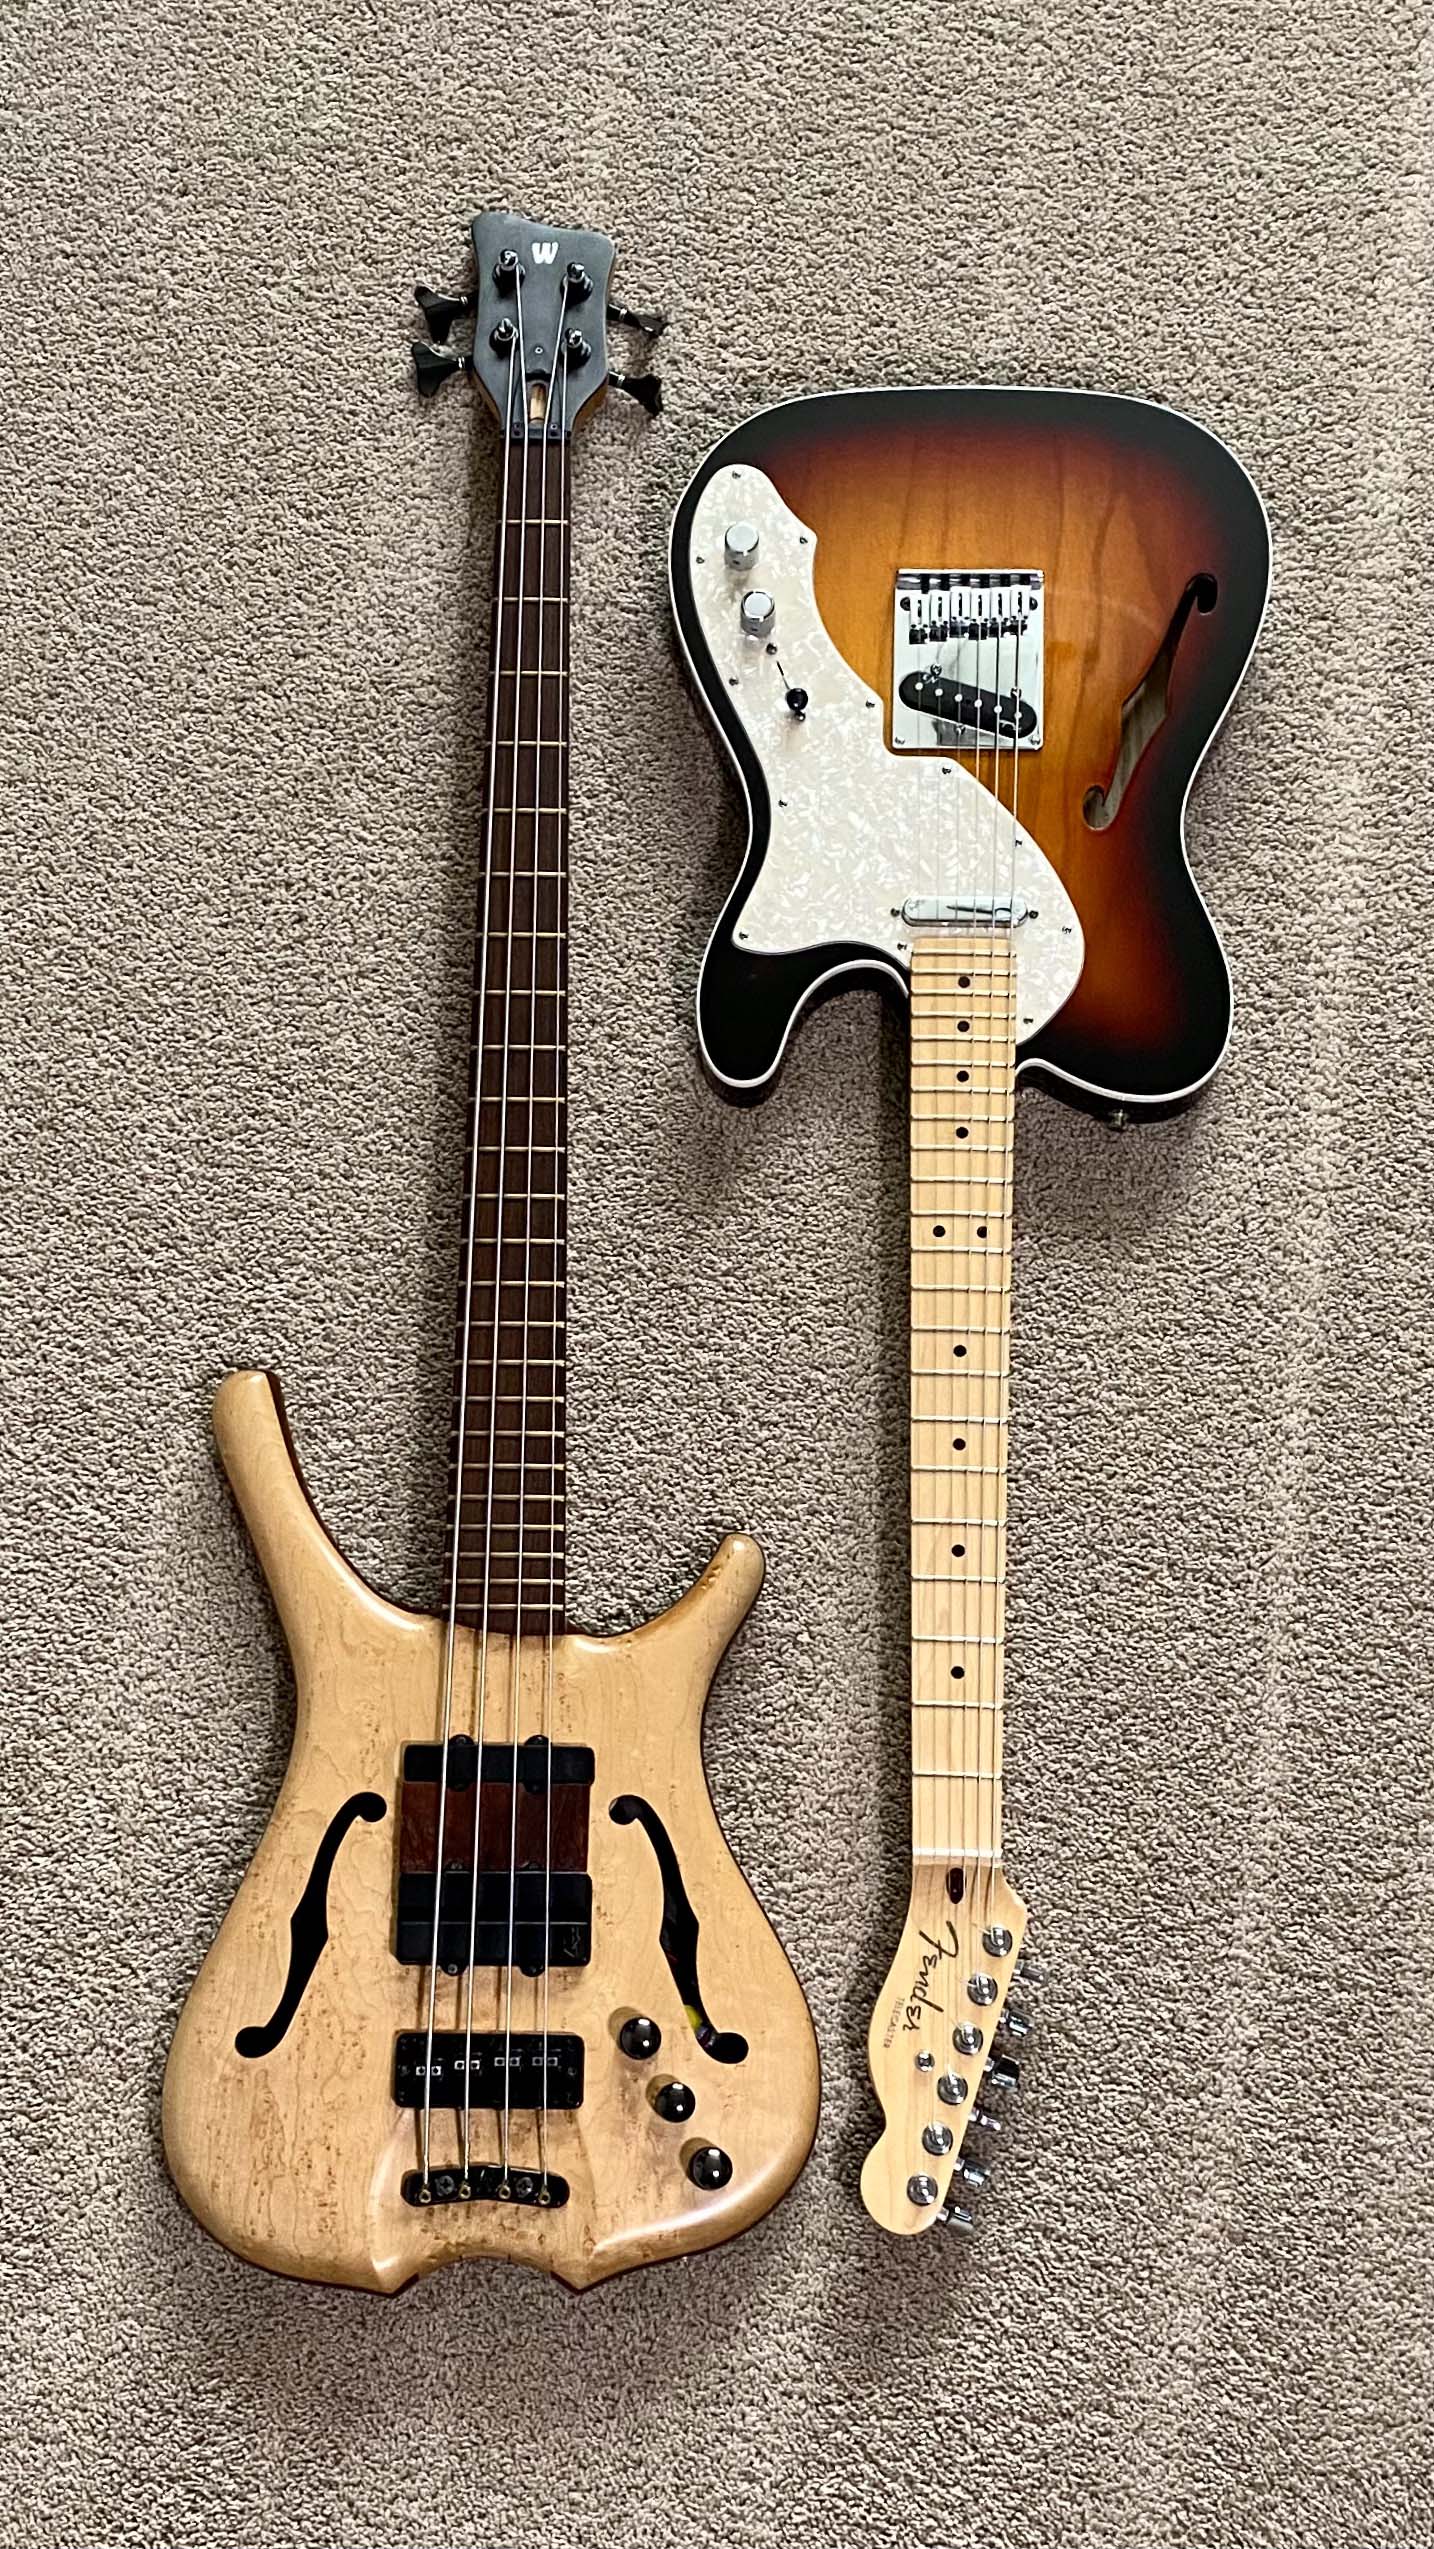 Warwick Infinity LTD 2000 bass and my Fender Telecaster